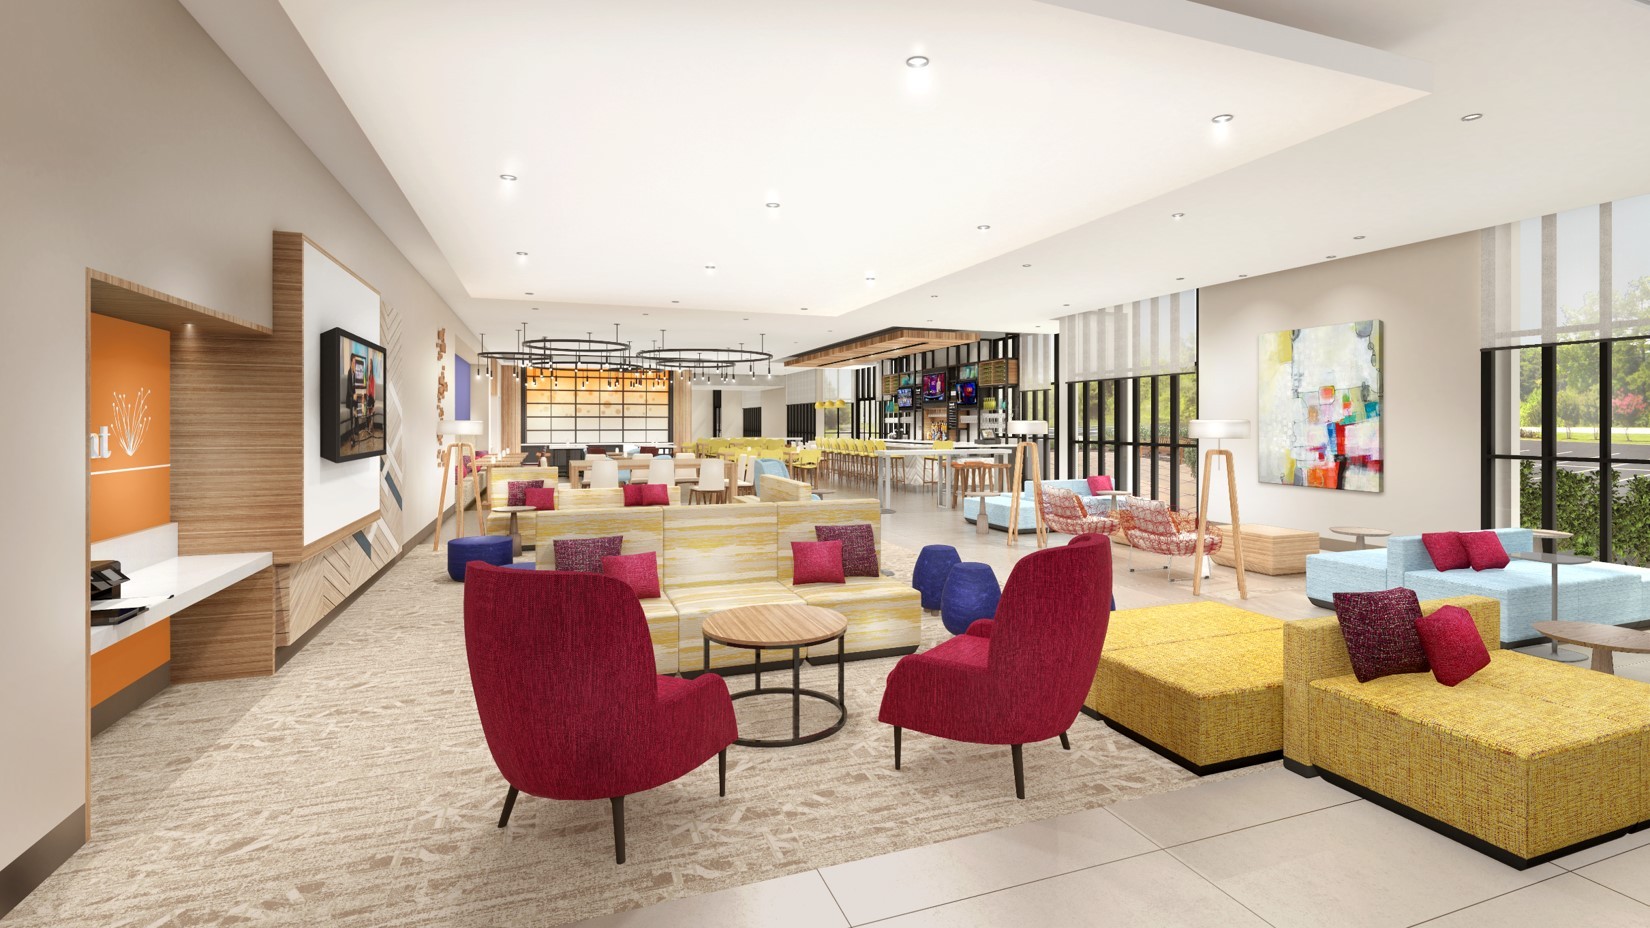 Hilton Garden Inn Launches Six Region Specific Hotel Prototypes To